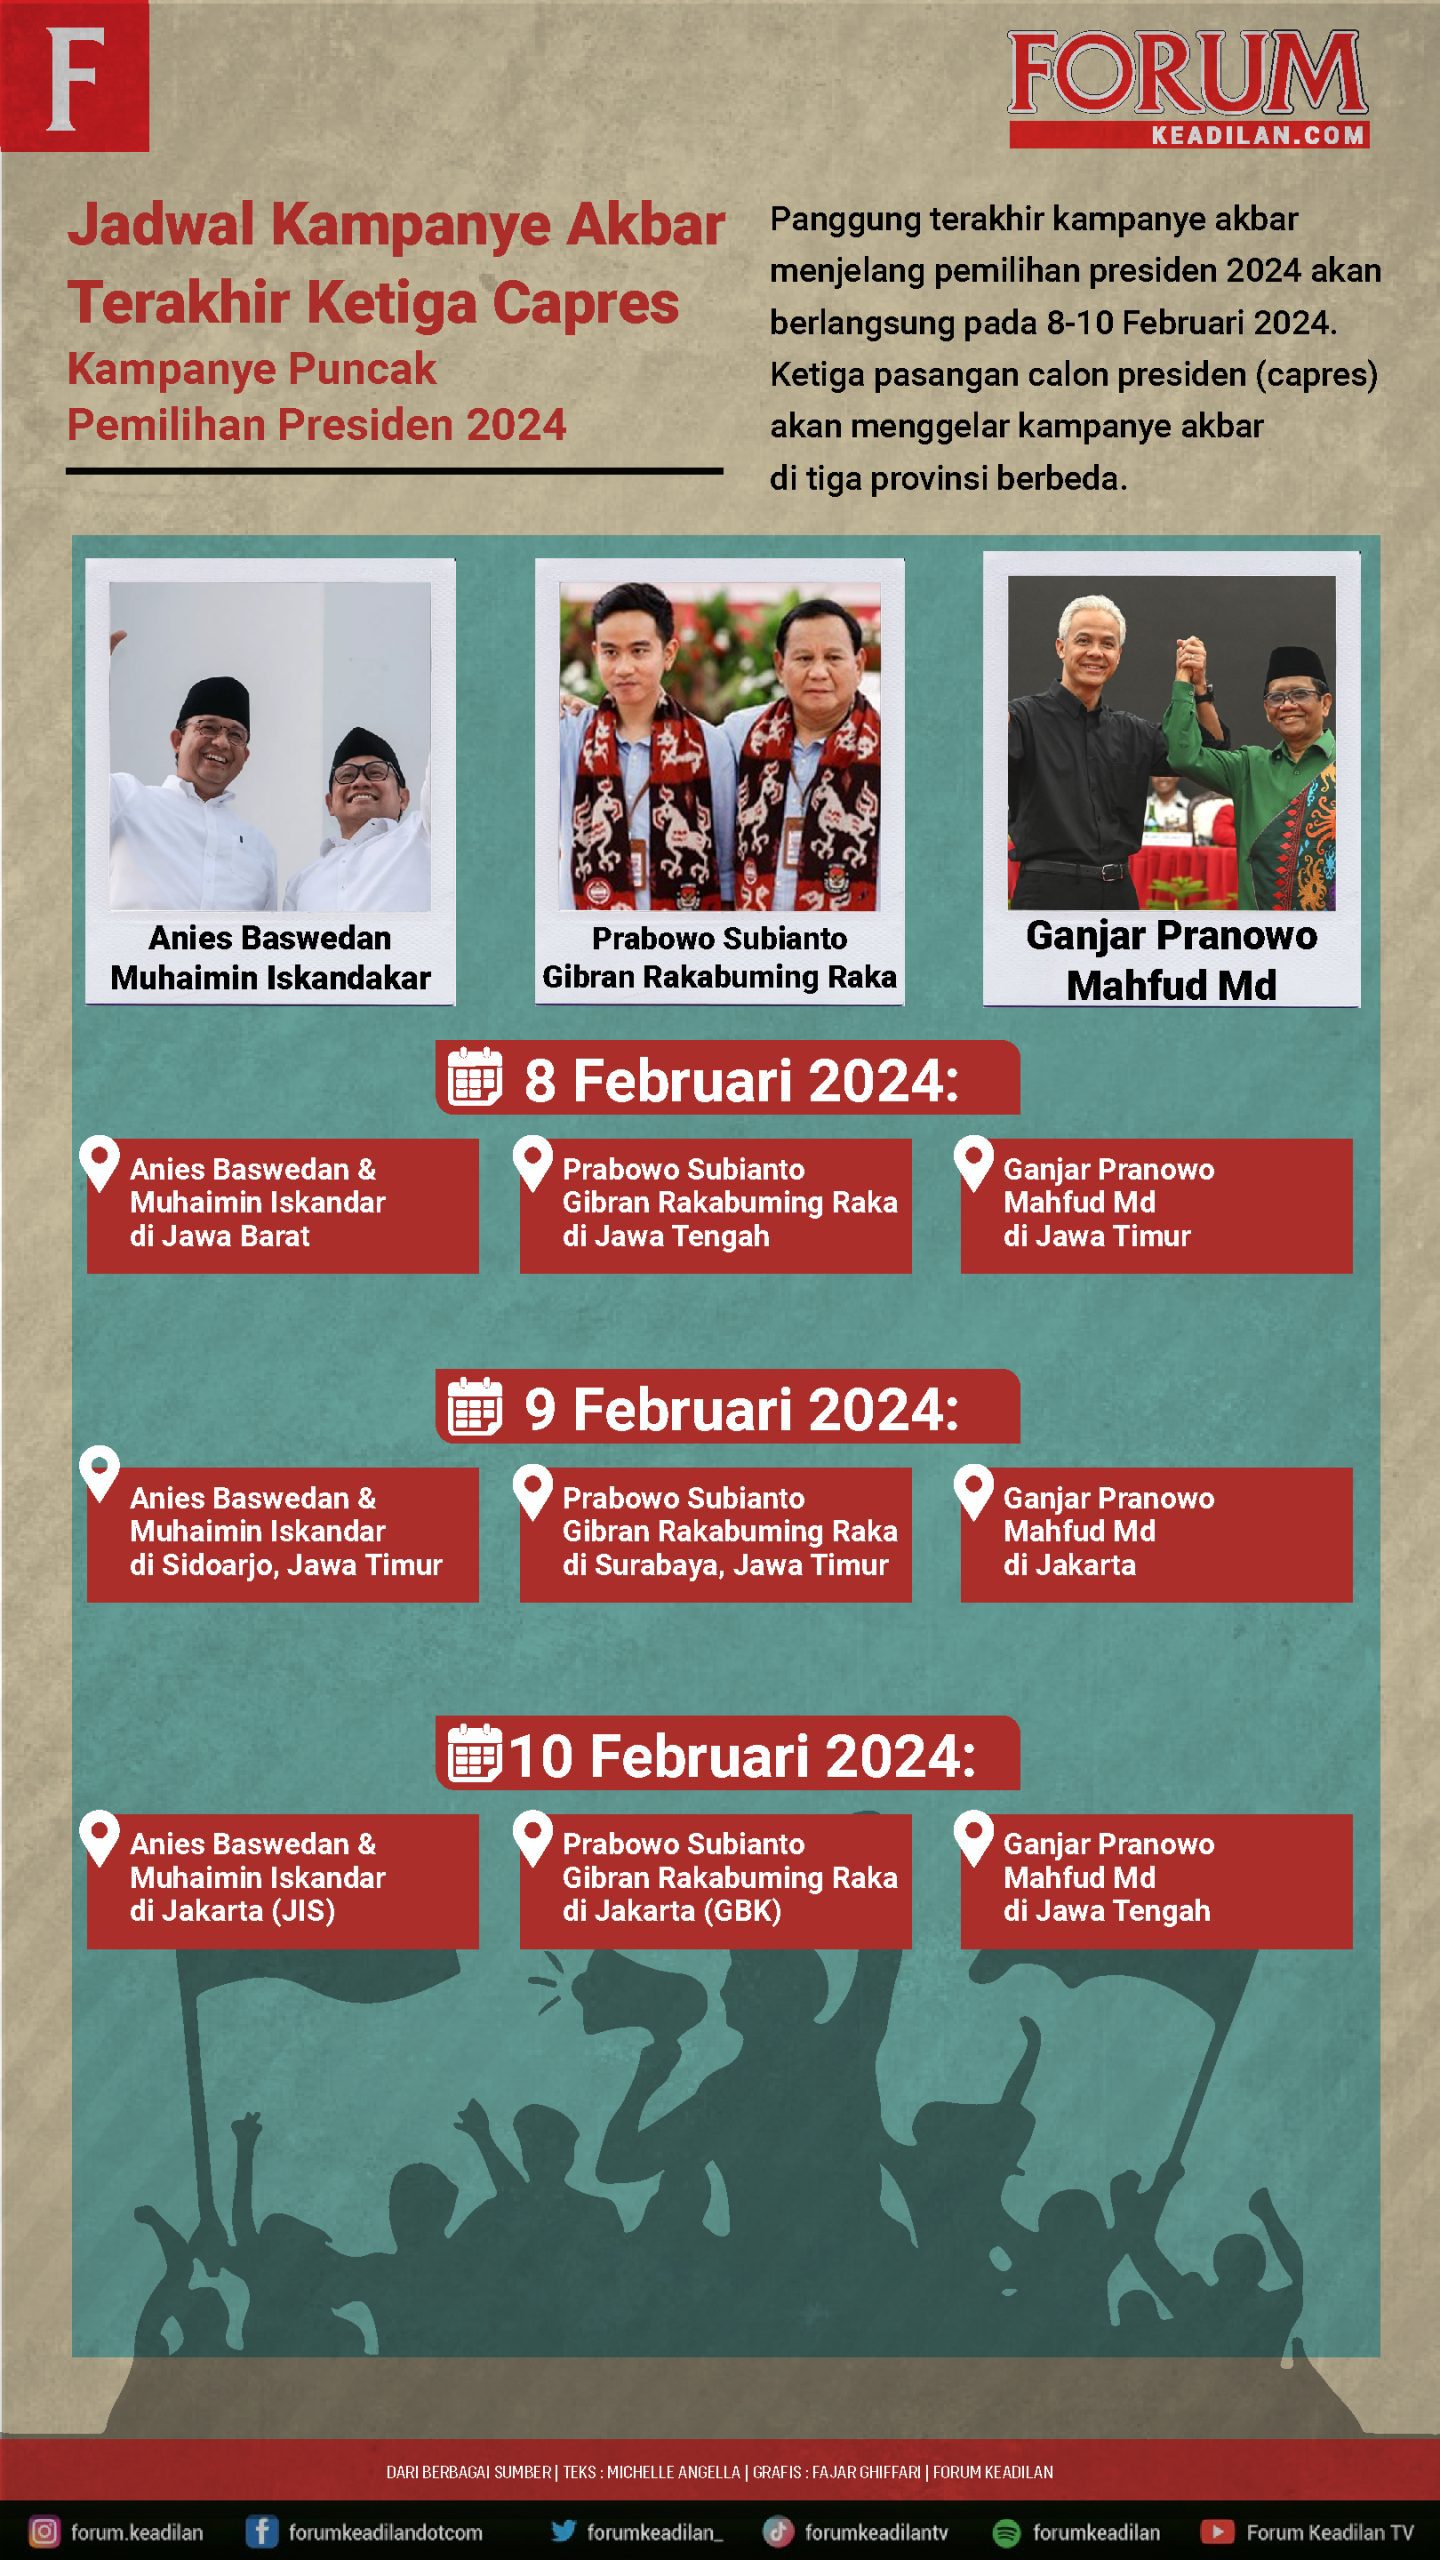 Ilustrasi Infografis Jadwal Kampanye Akbar Terakhir Ketiga Capres| Rahmad Fadjar Ghiffari/Forum Keadilan